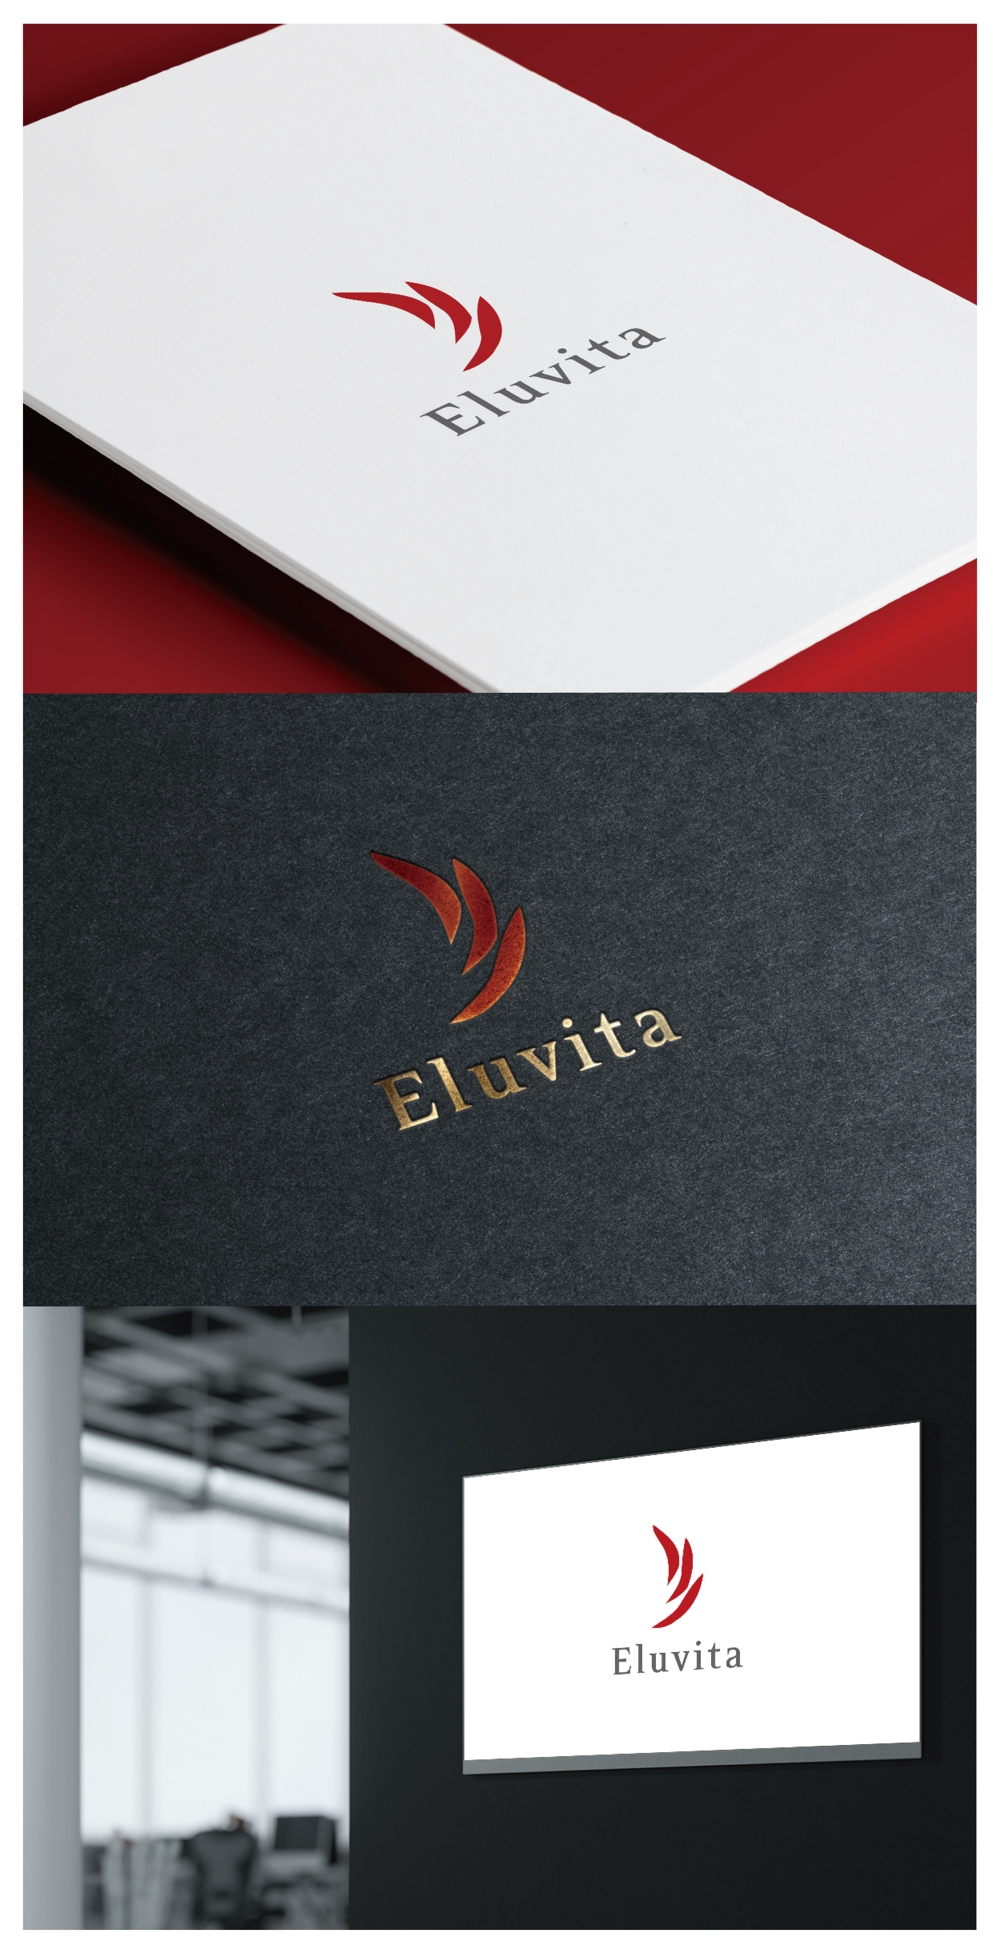 Eluvita_logo02_01.jpg